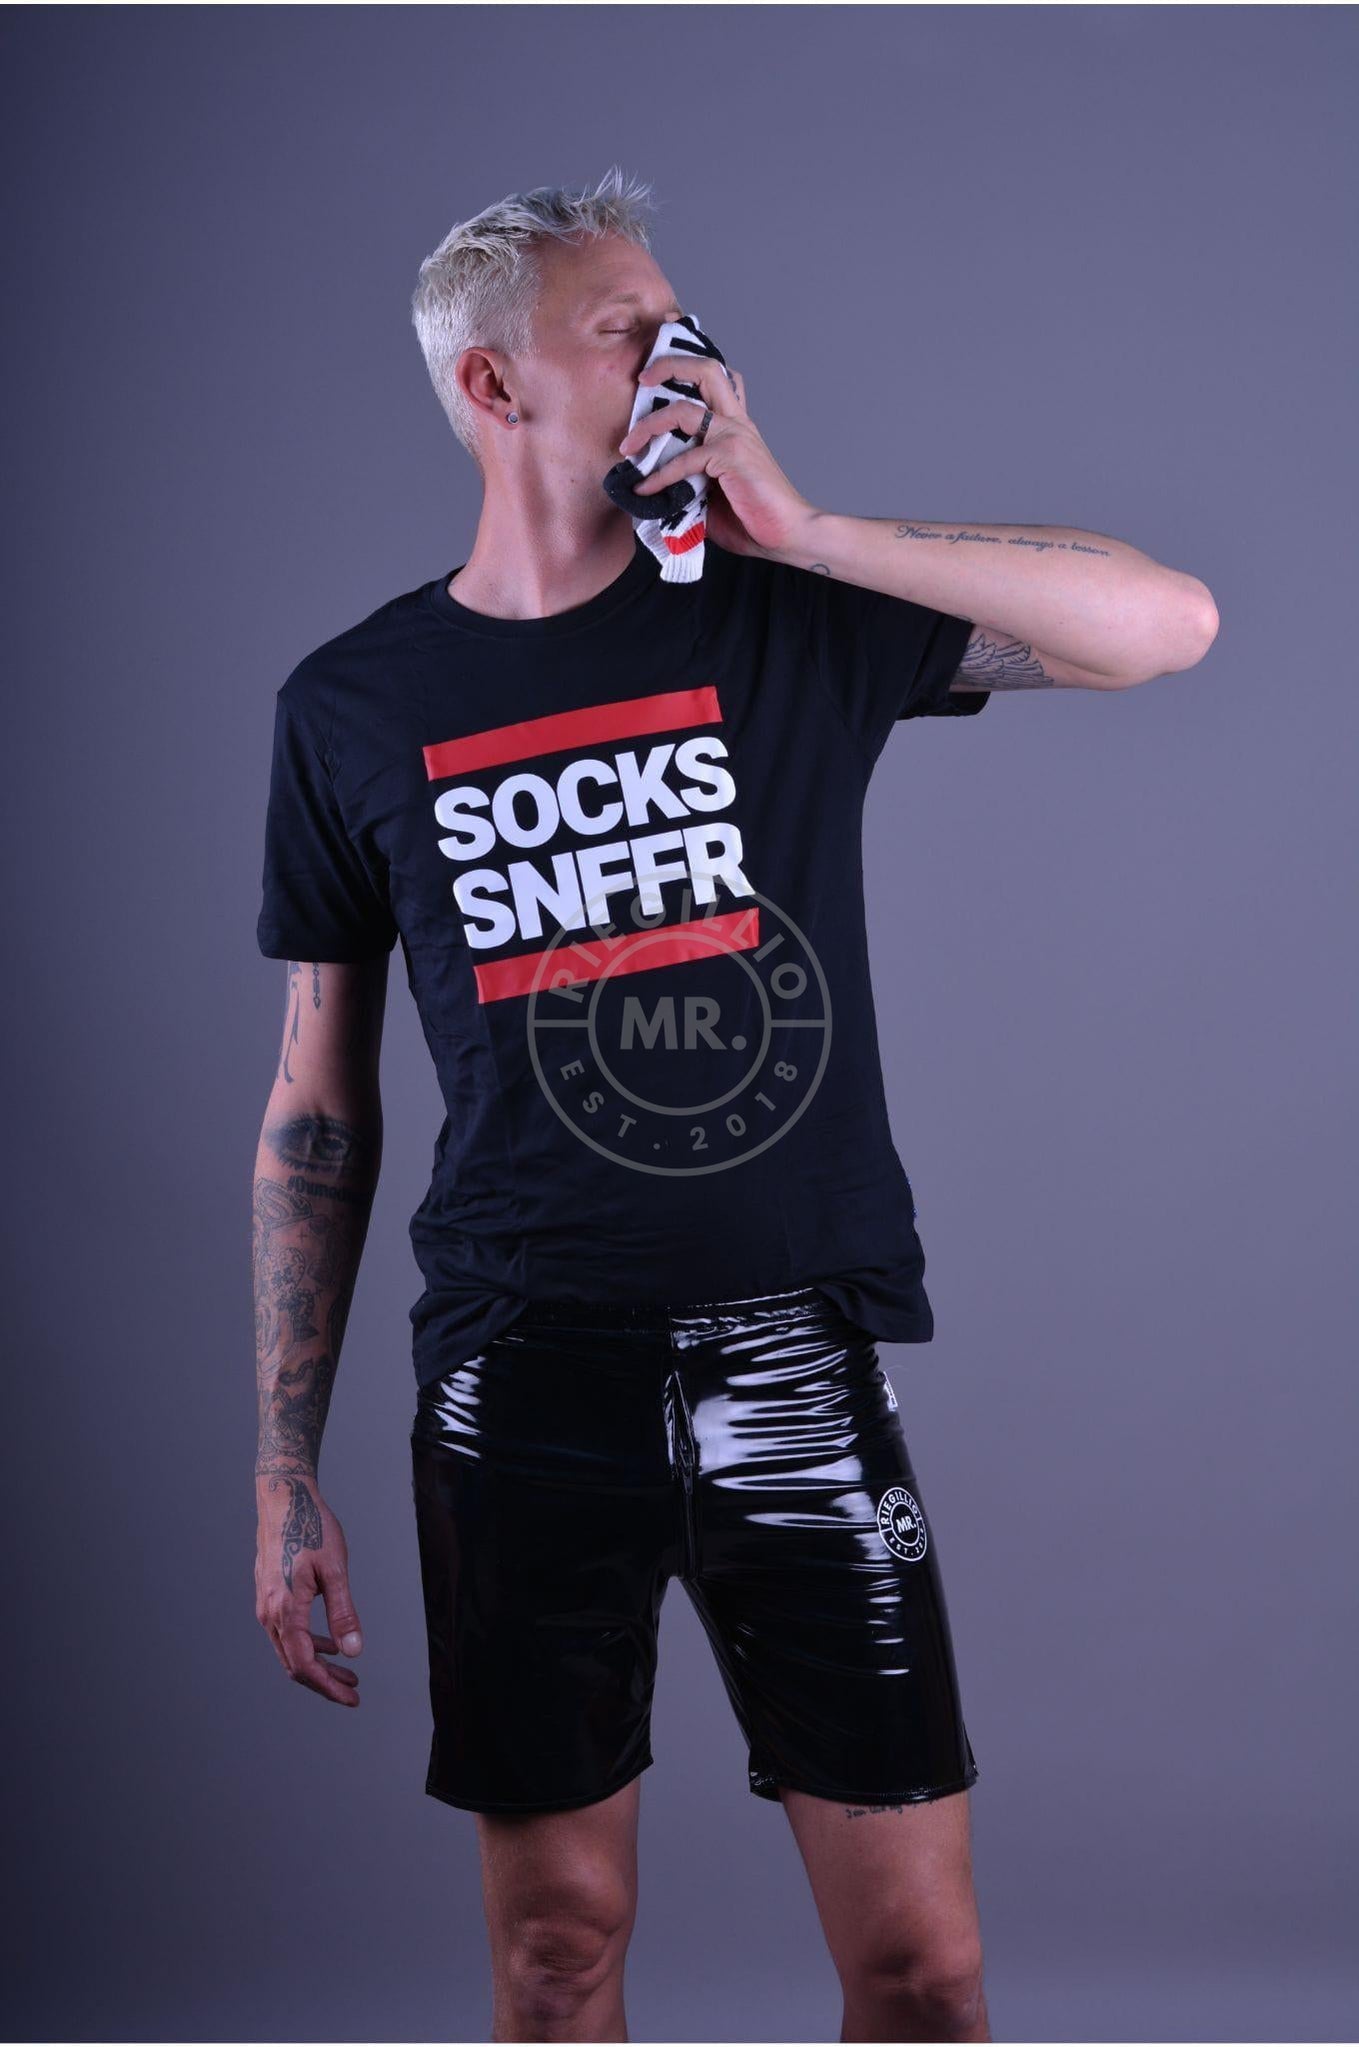 Sk8erboy SOCKS SNFFR T-Shirt-at MR. Riegillio